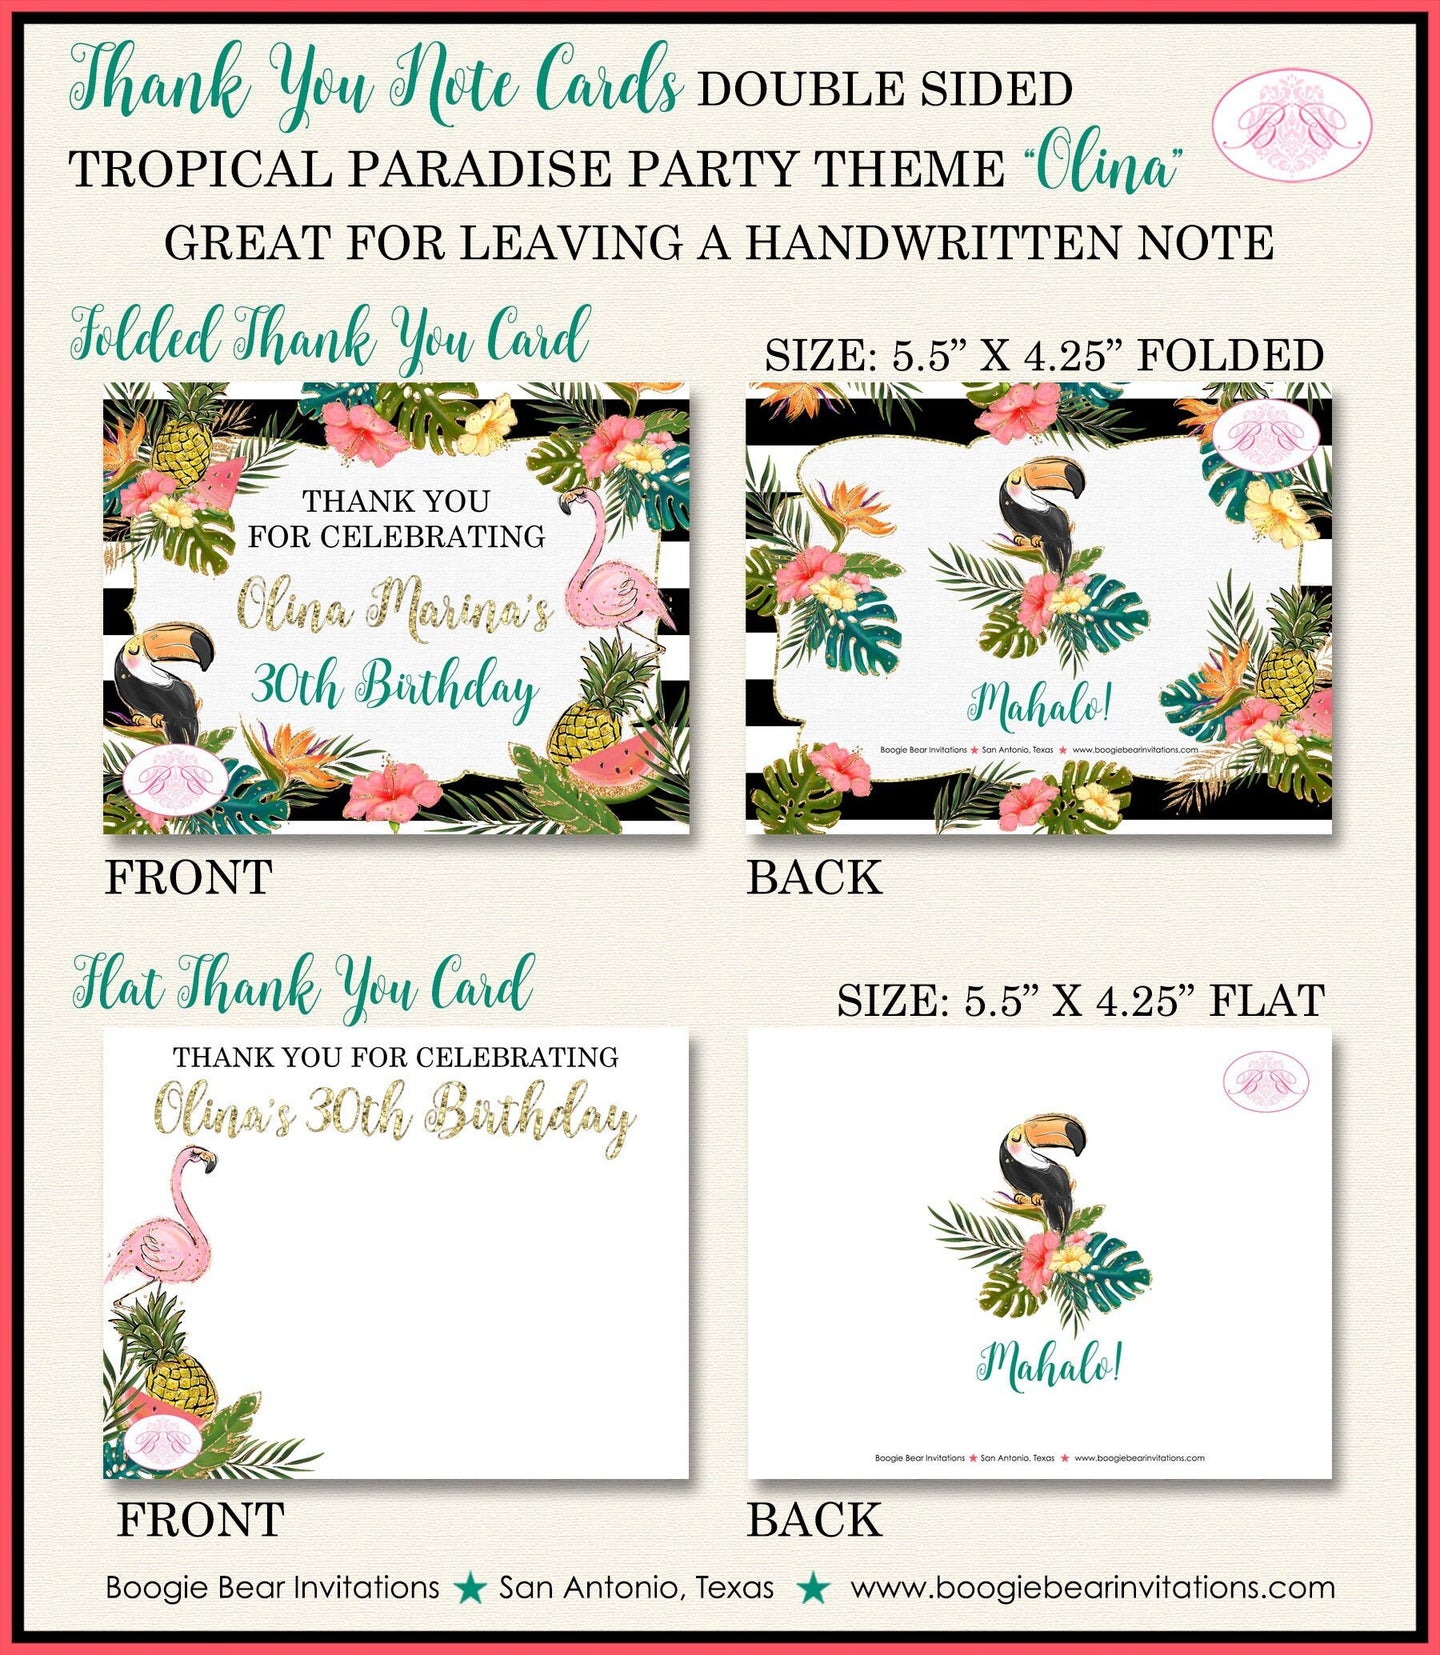 Tropical Paradise Birthday Party Thank You Card Girl Flamingo Toucan Pineapple Watermelon Hawaii Boogie Bear Invitations Olina Theme Printed